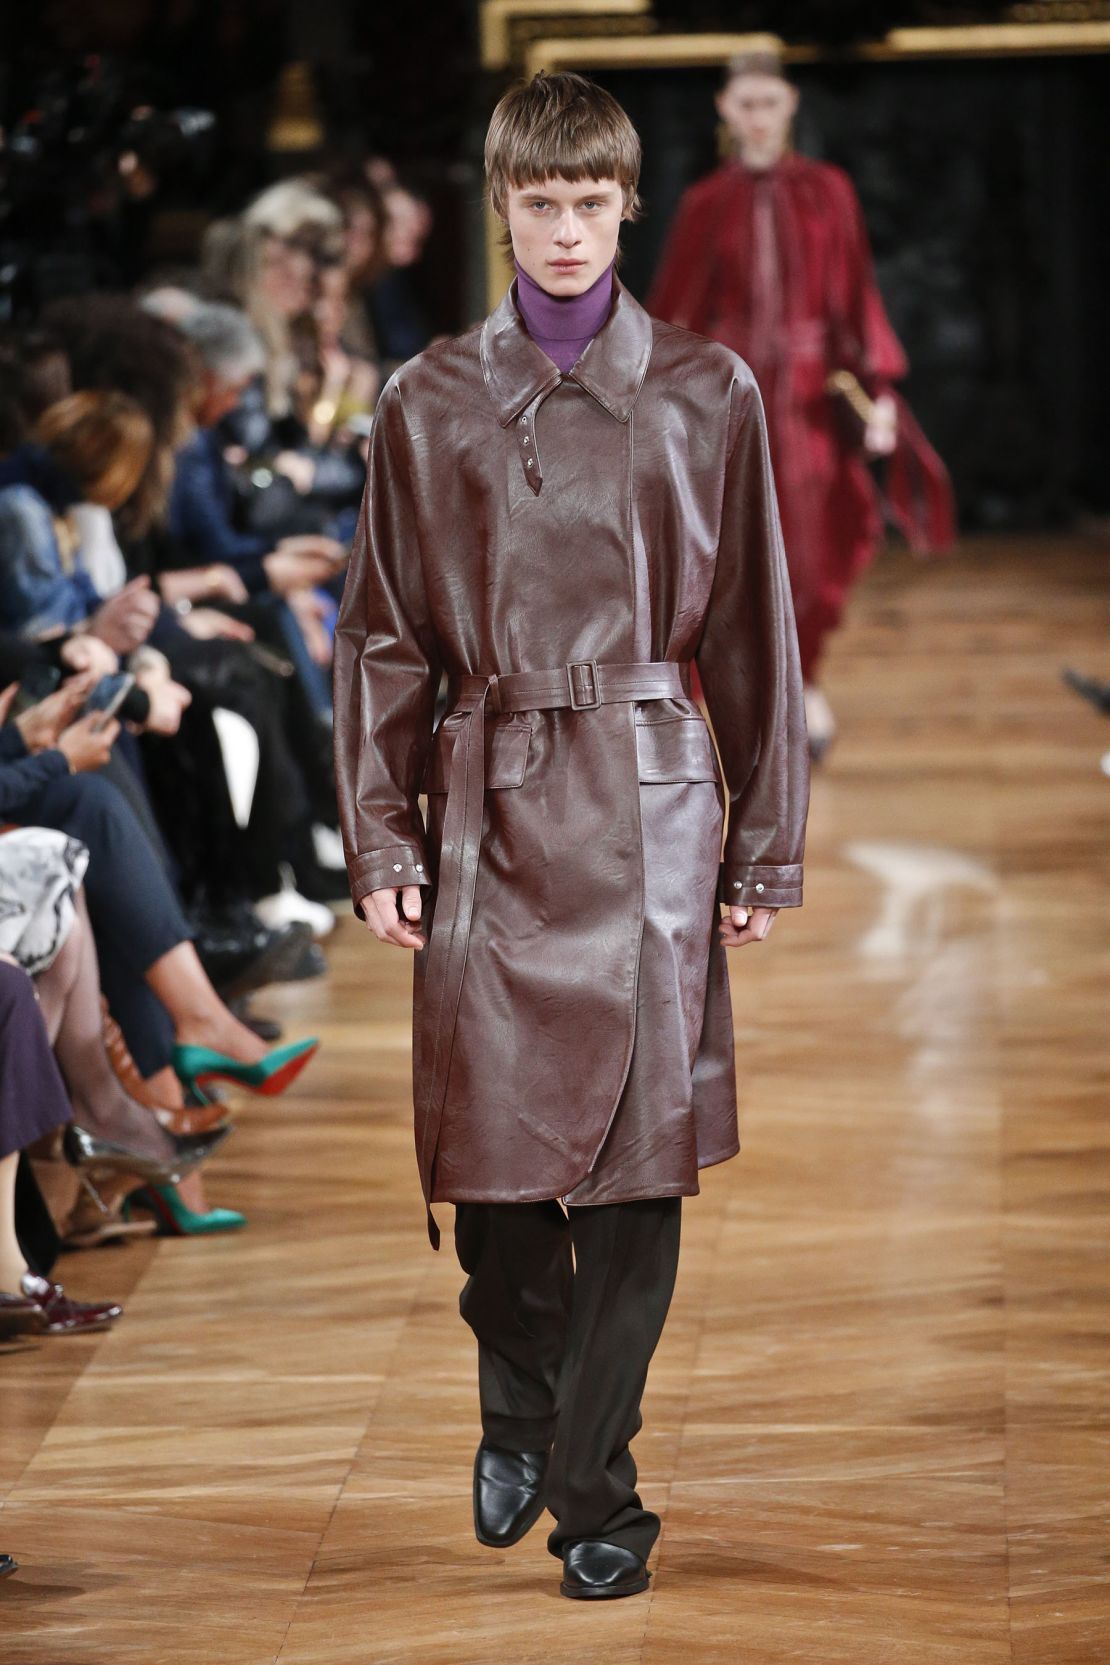 A model wearing a vegan leather jacket walks the Stella McCartney runway as part of Paris Fashion Week in March 2020. 